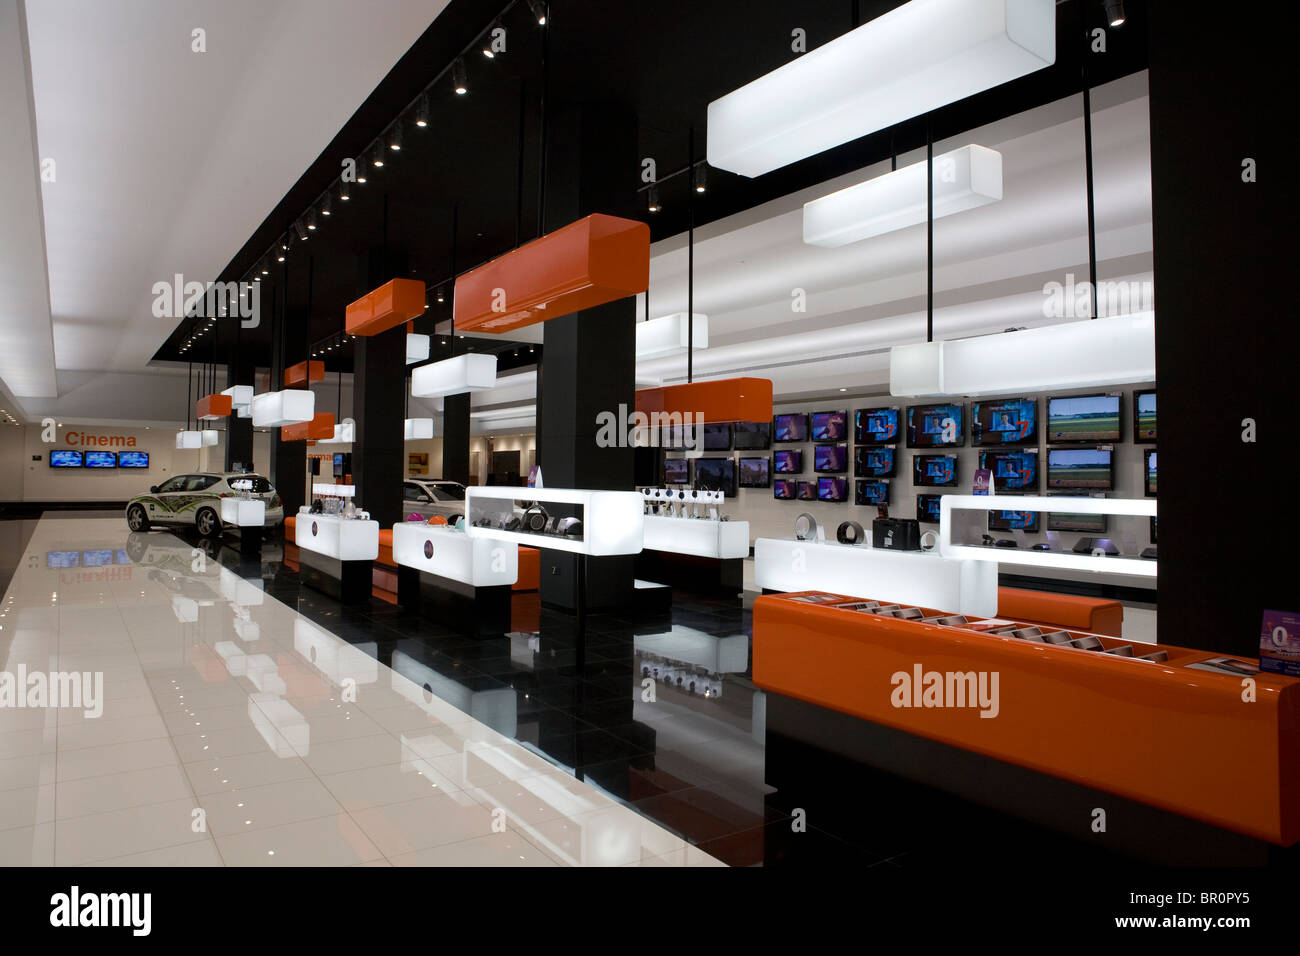 Modern design style of an electronic shop inside the shopping centre Dubai Mall. Stock Photo